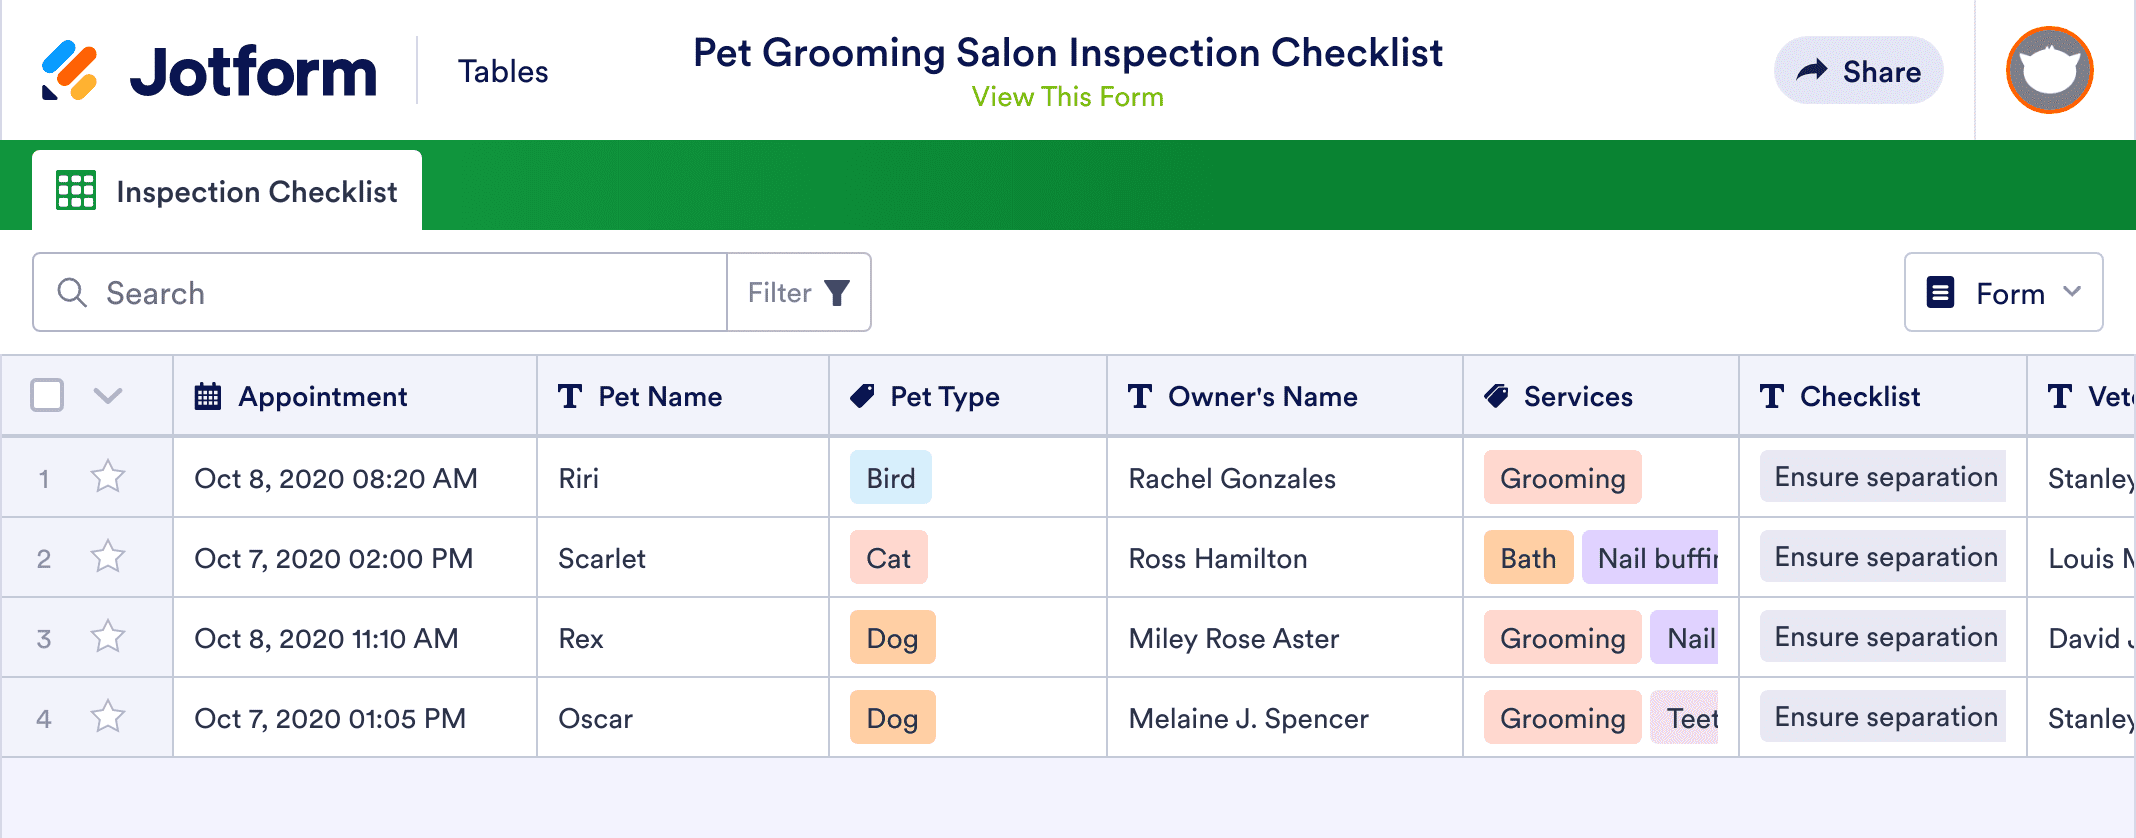 Pet Grooming Salon Inspection Checklist